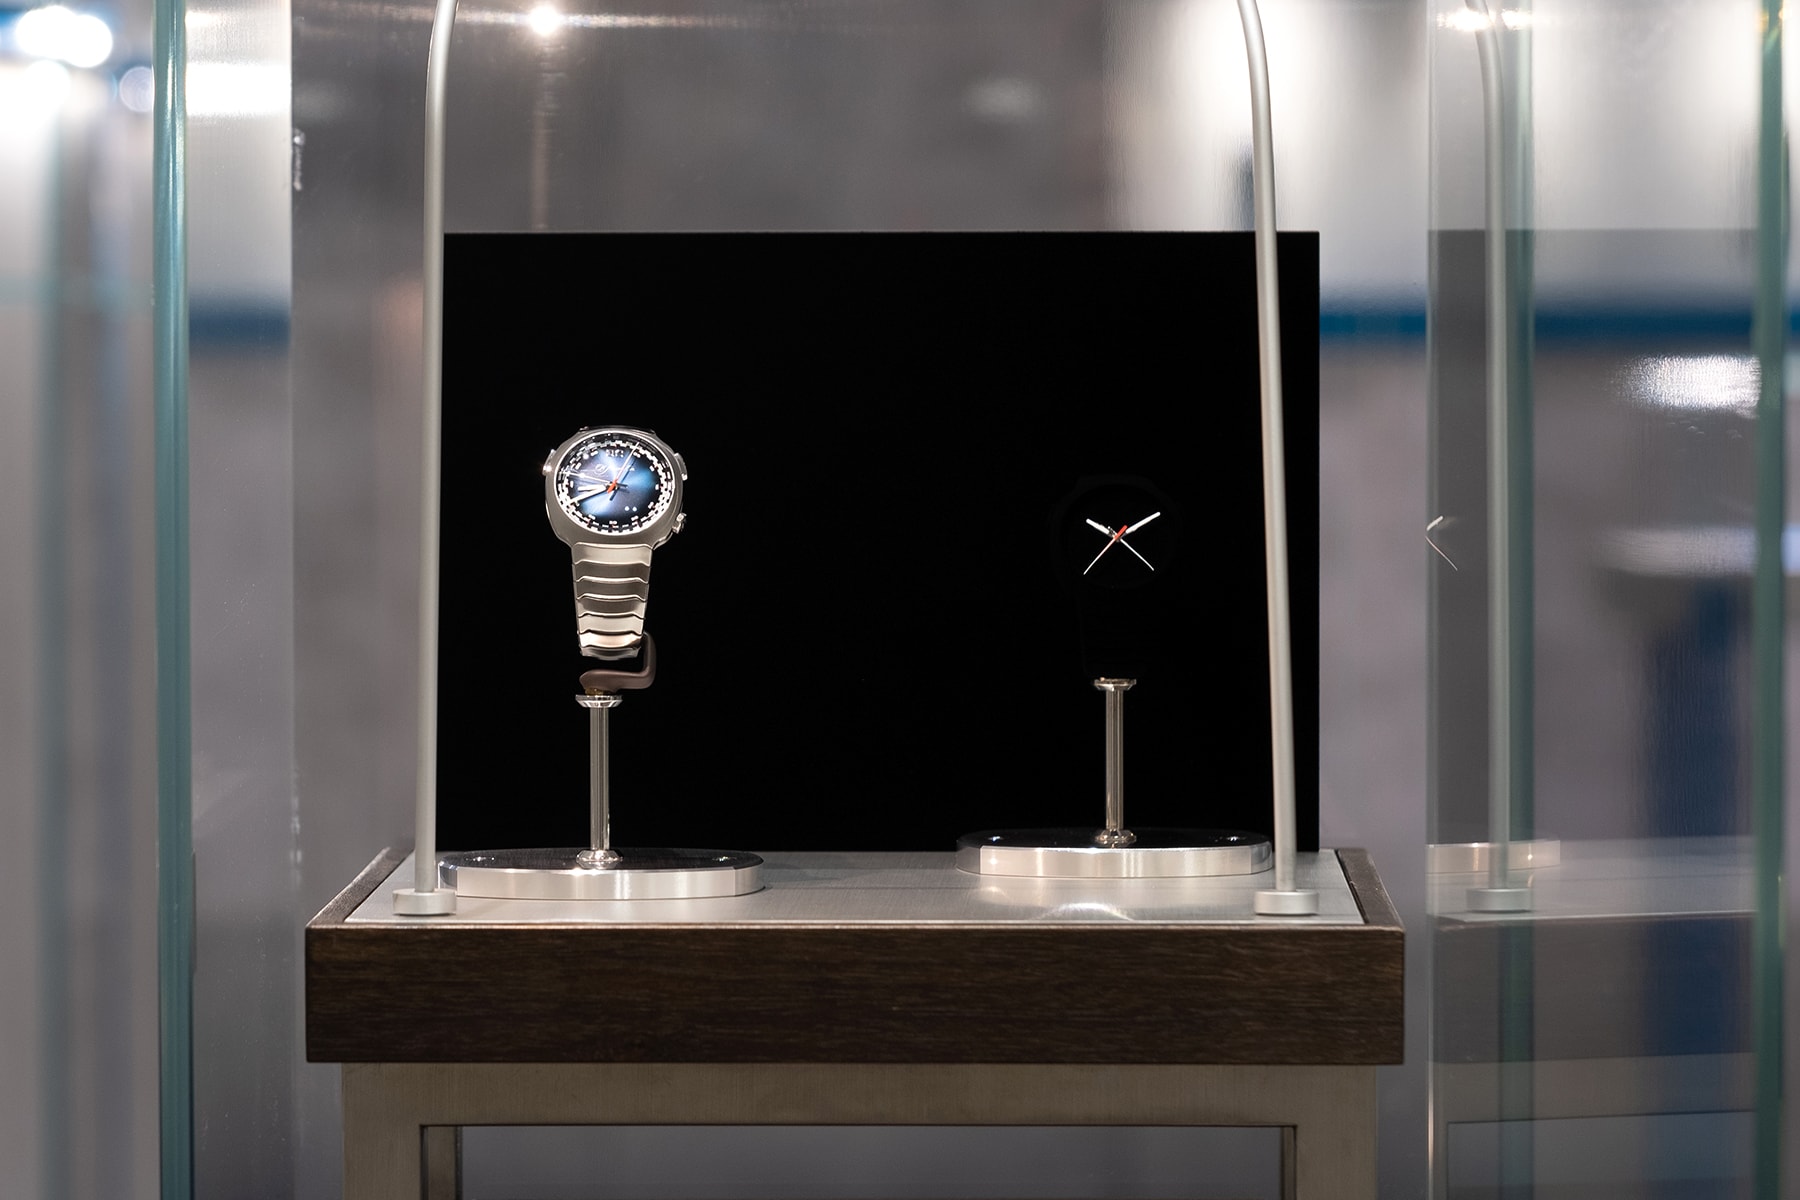 H. Moser & Cie. Vantablack "stealth mode" blacker than black concept watch info Streamliner Watches and Wonders 2022